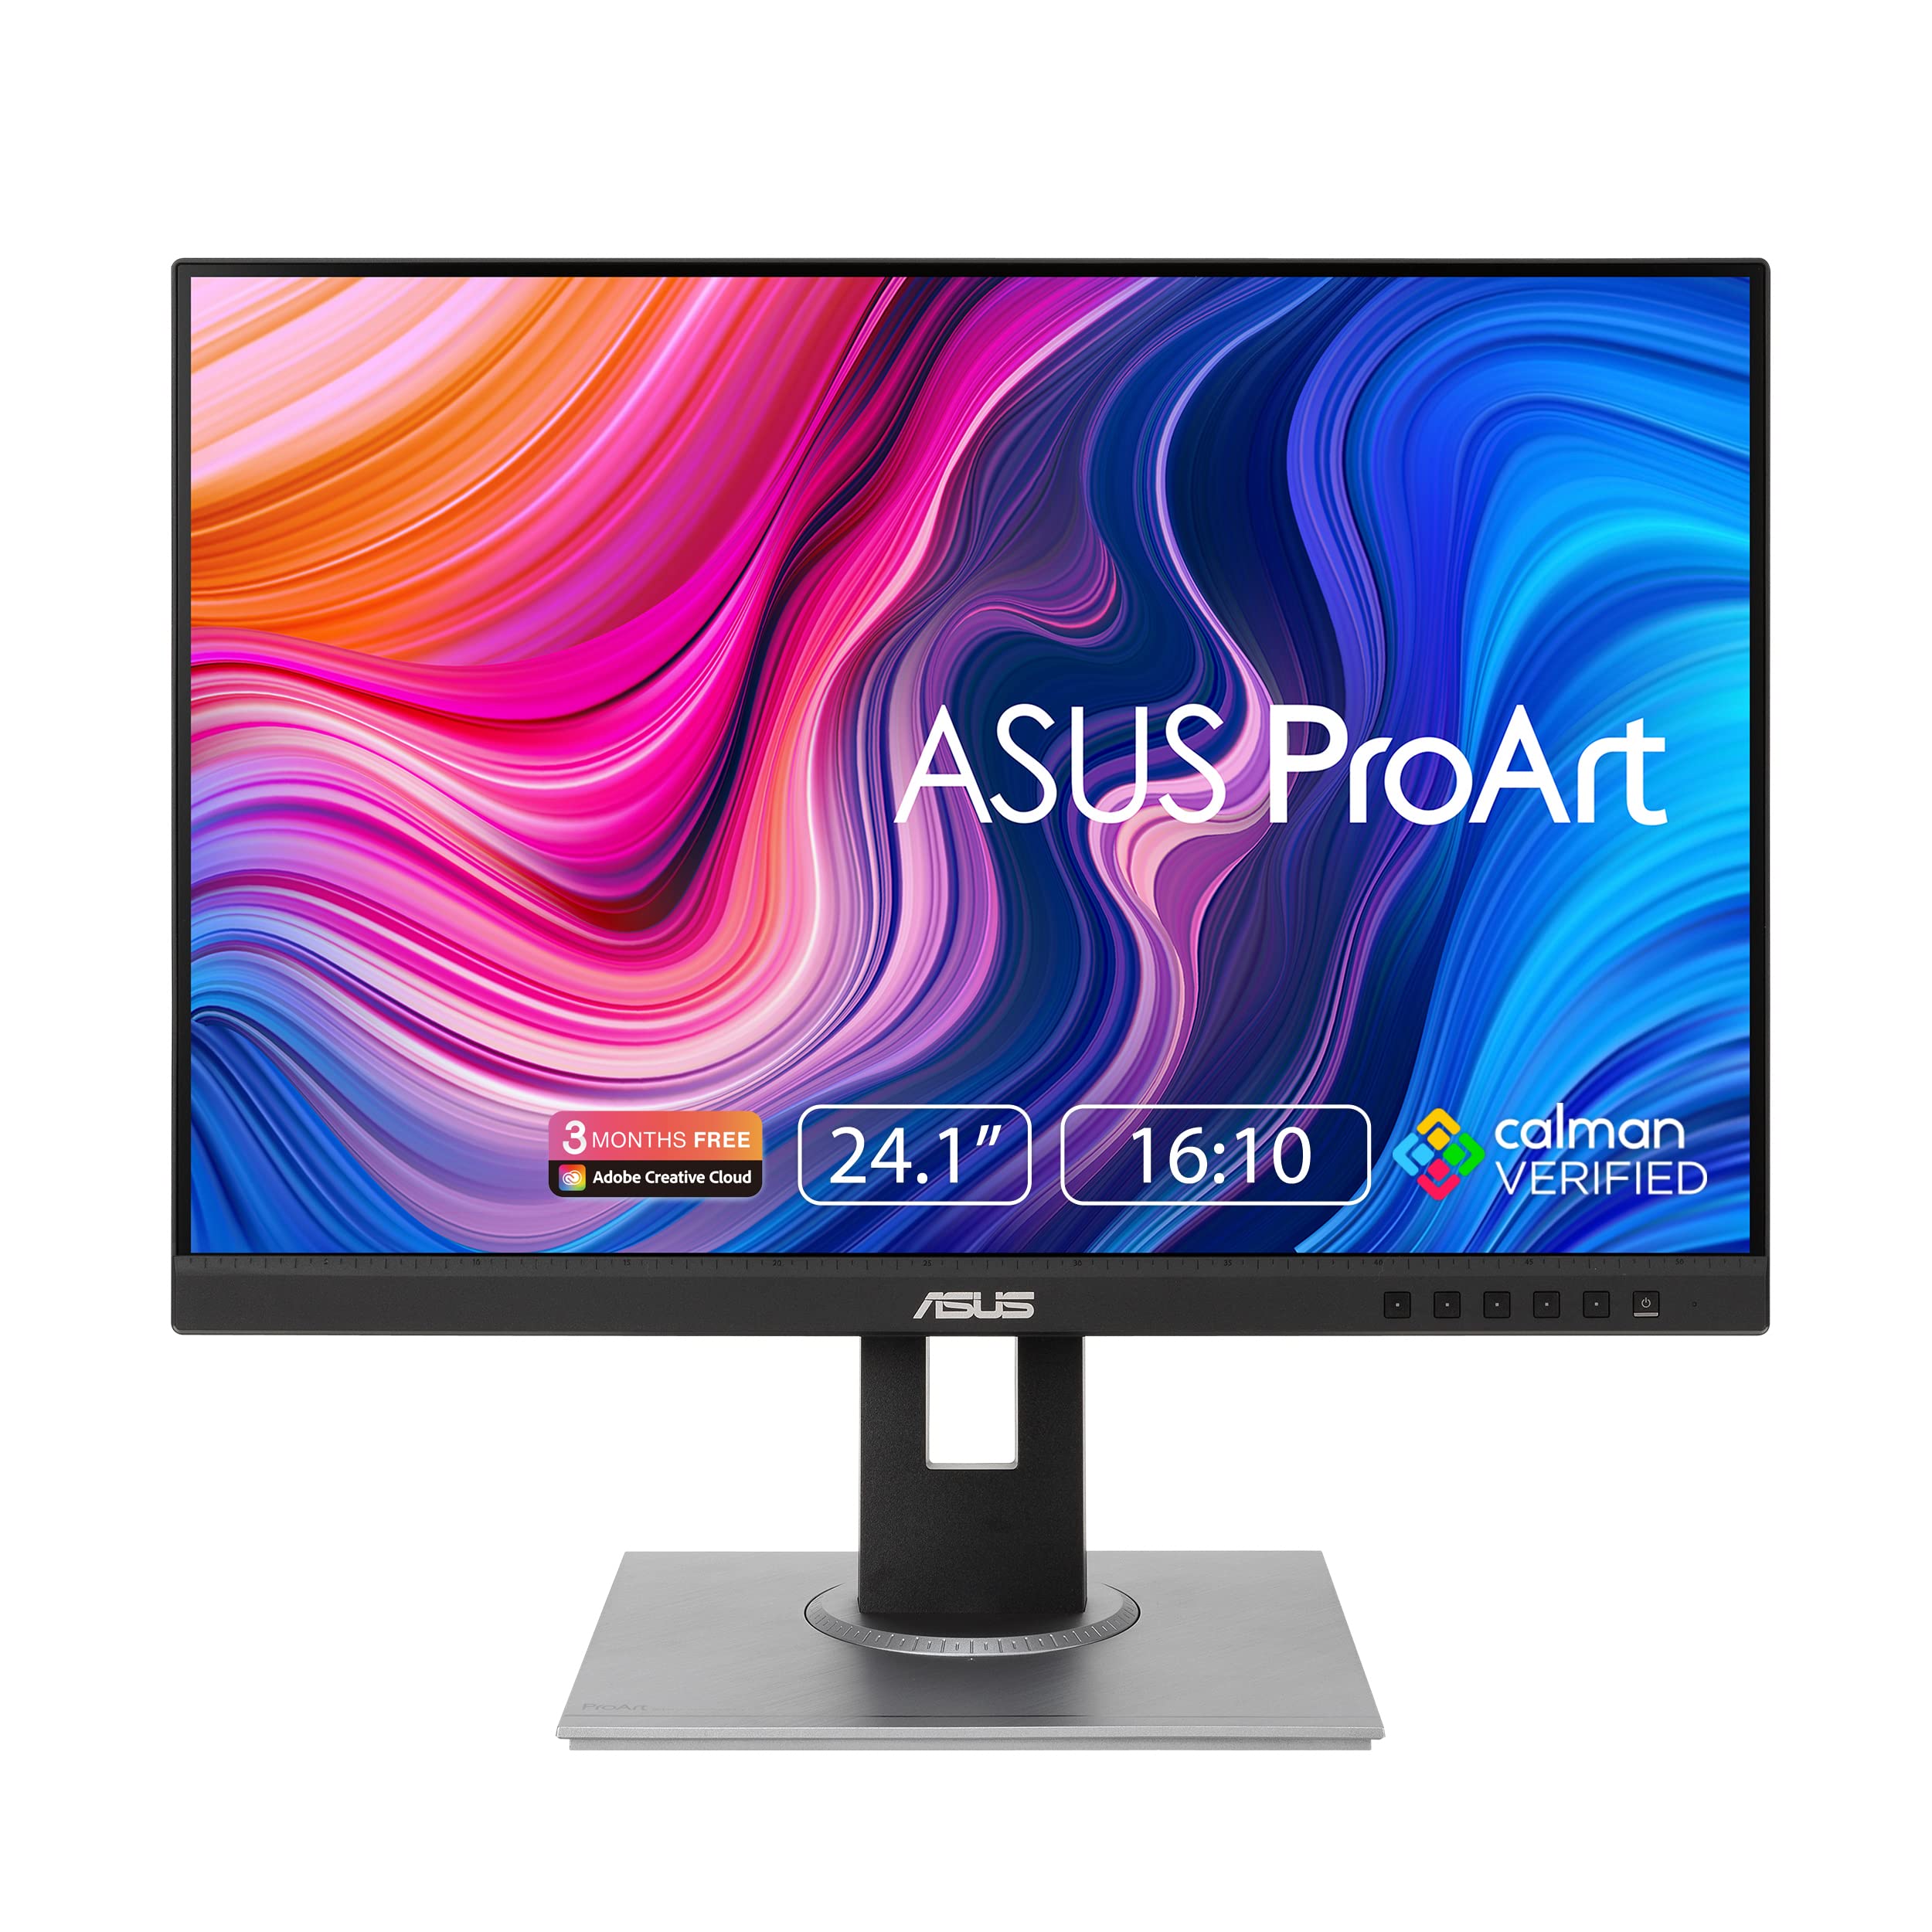 $169.00: ASUS ProArt Display PA248QV 24.1” WUXGA (1920 x 1200) 16:10 Monitor